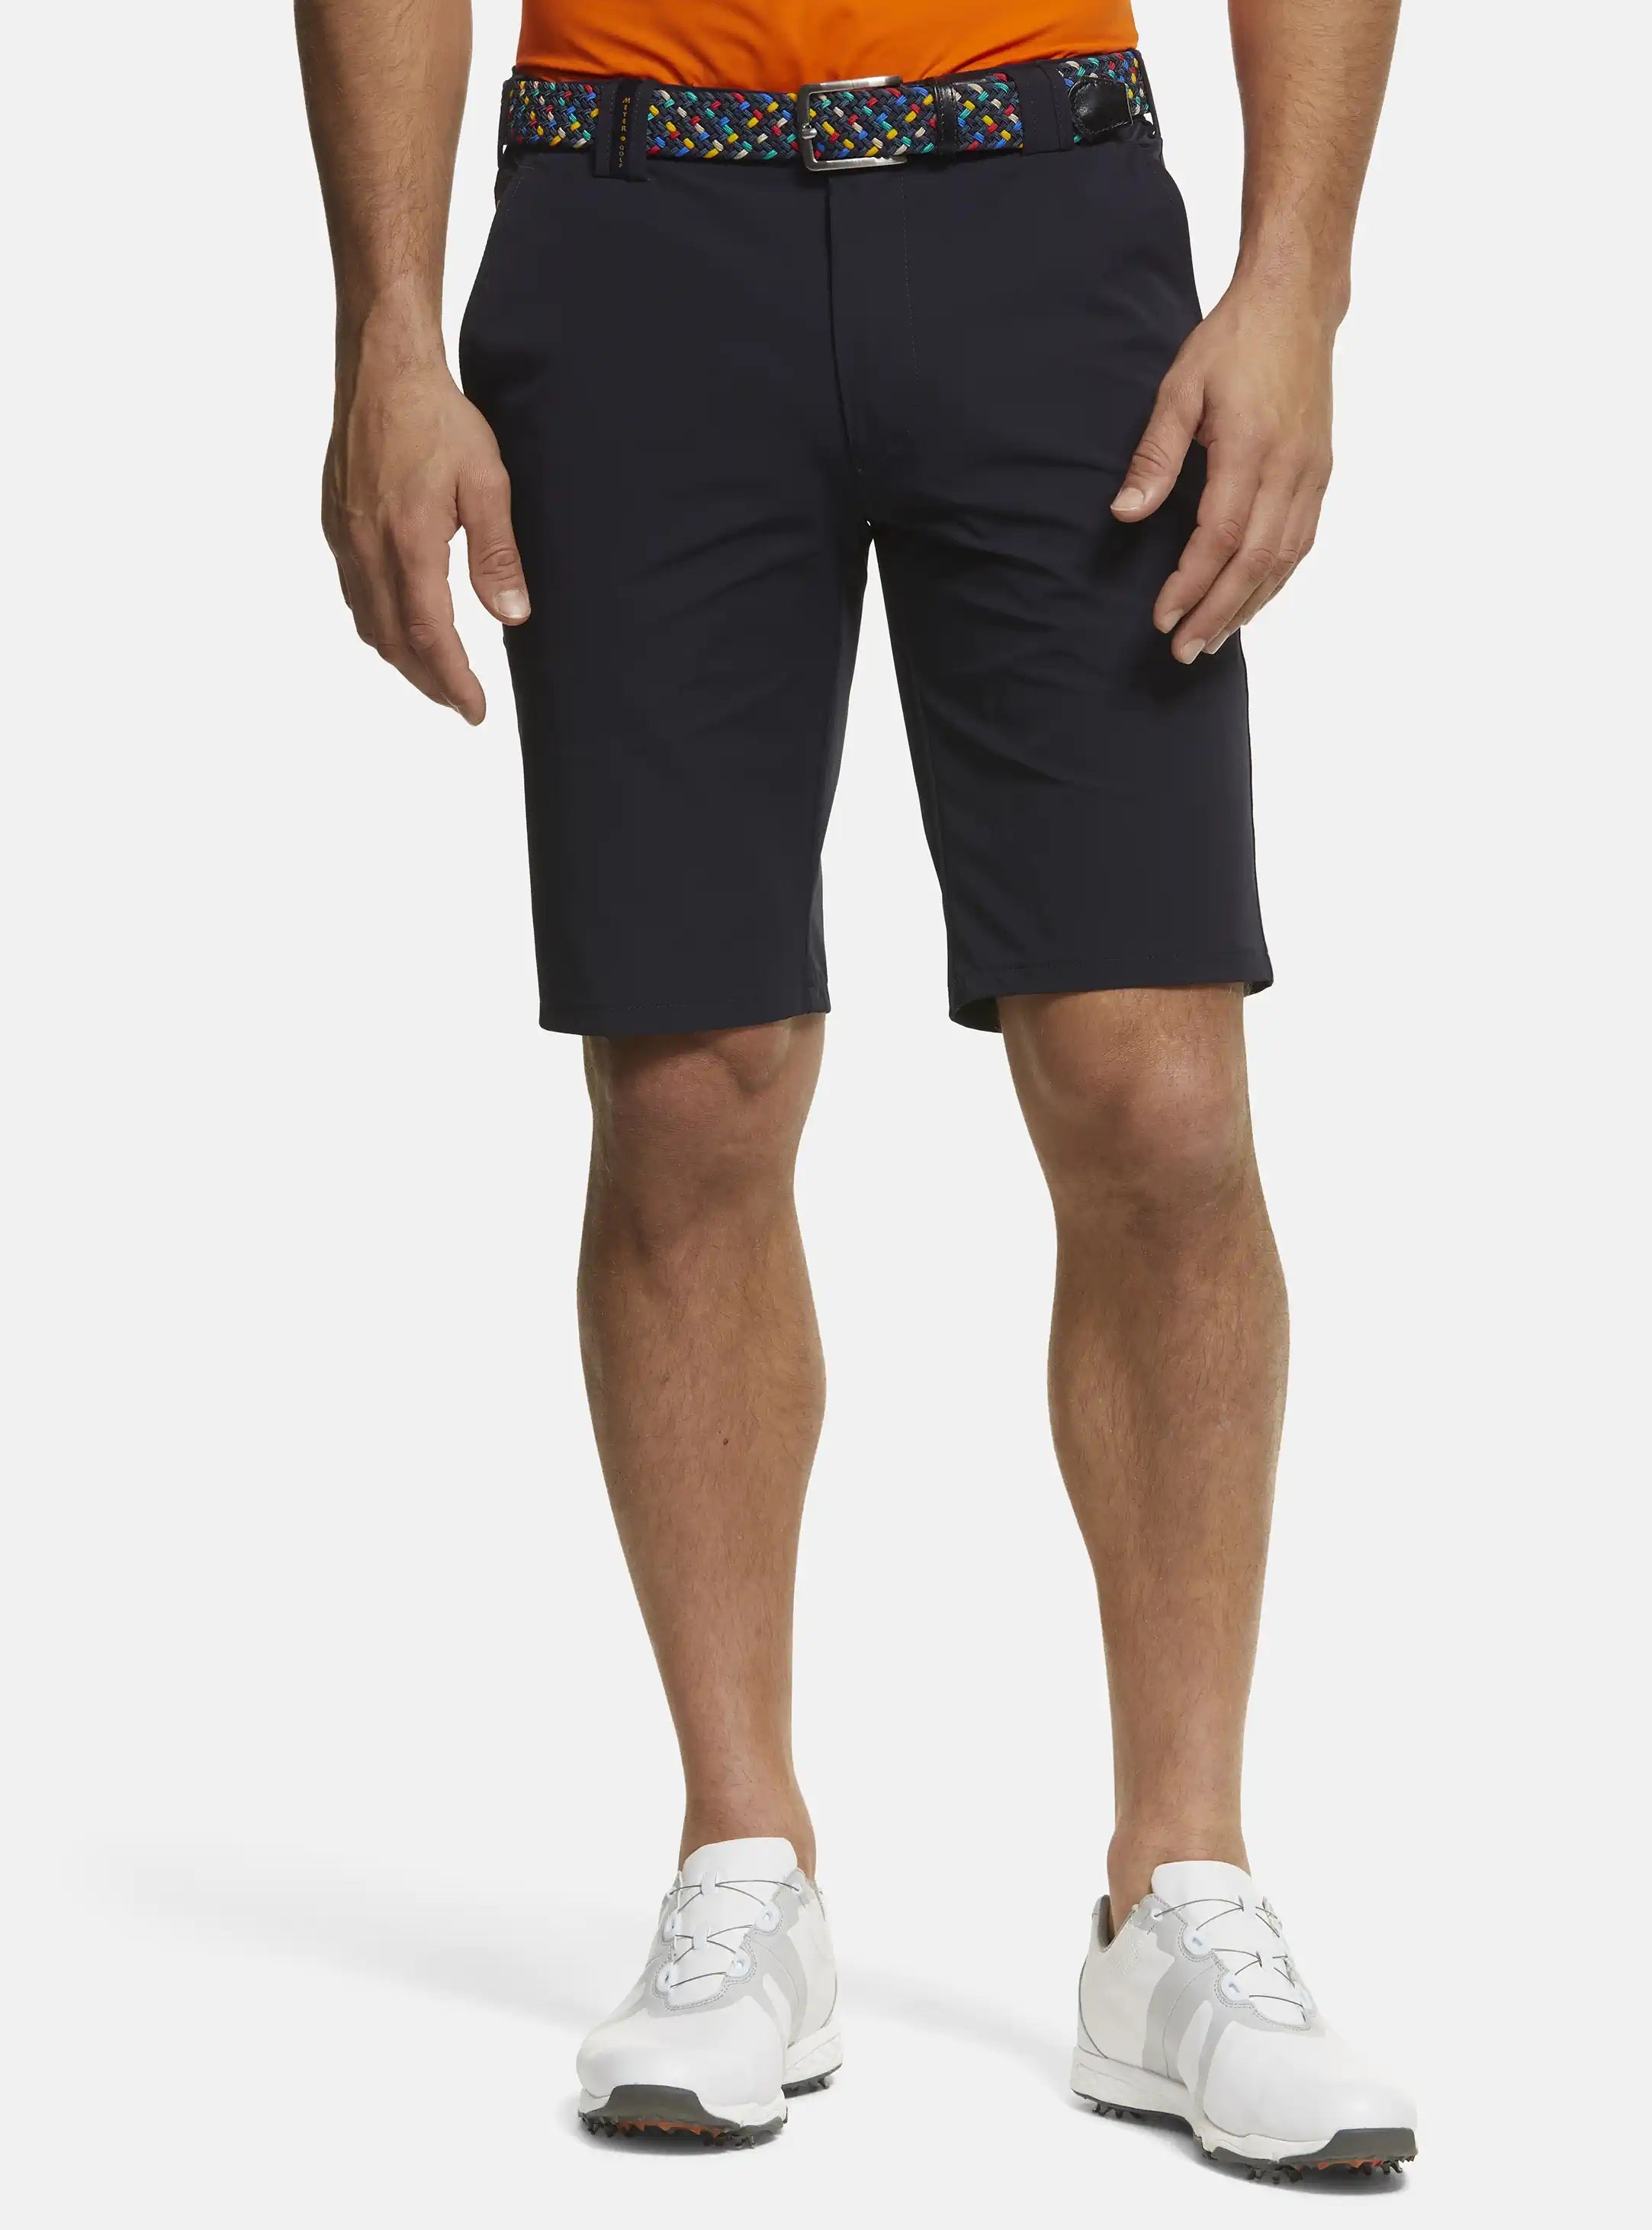 MEYER Golf Shorts - St. Andrews 8070 High Performance Cotton - Navy